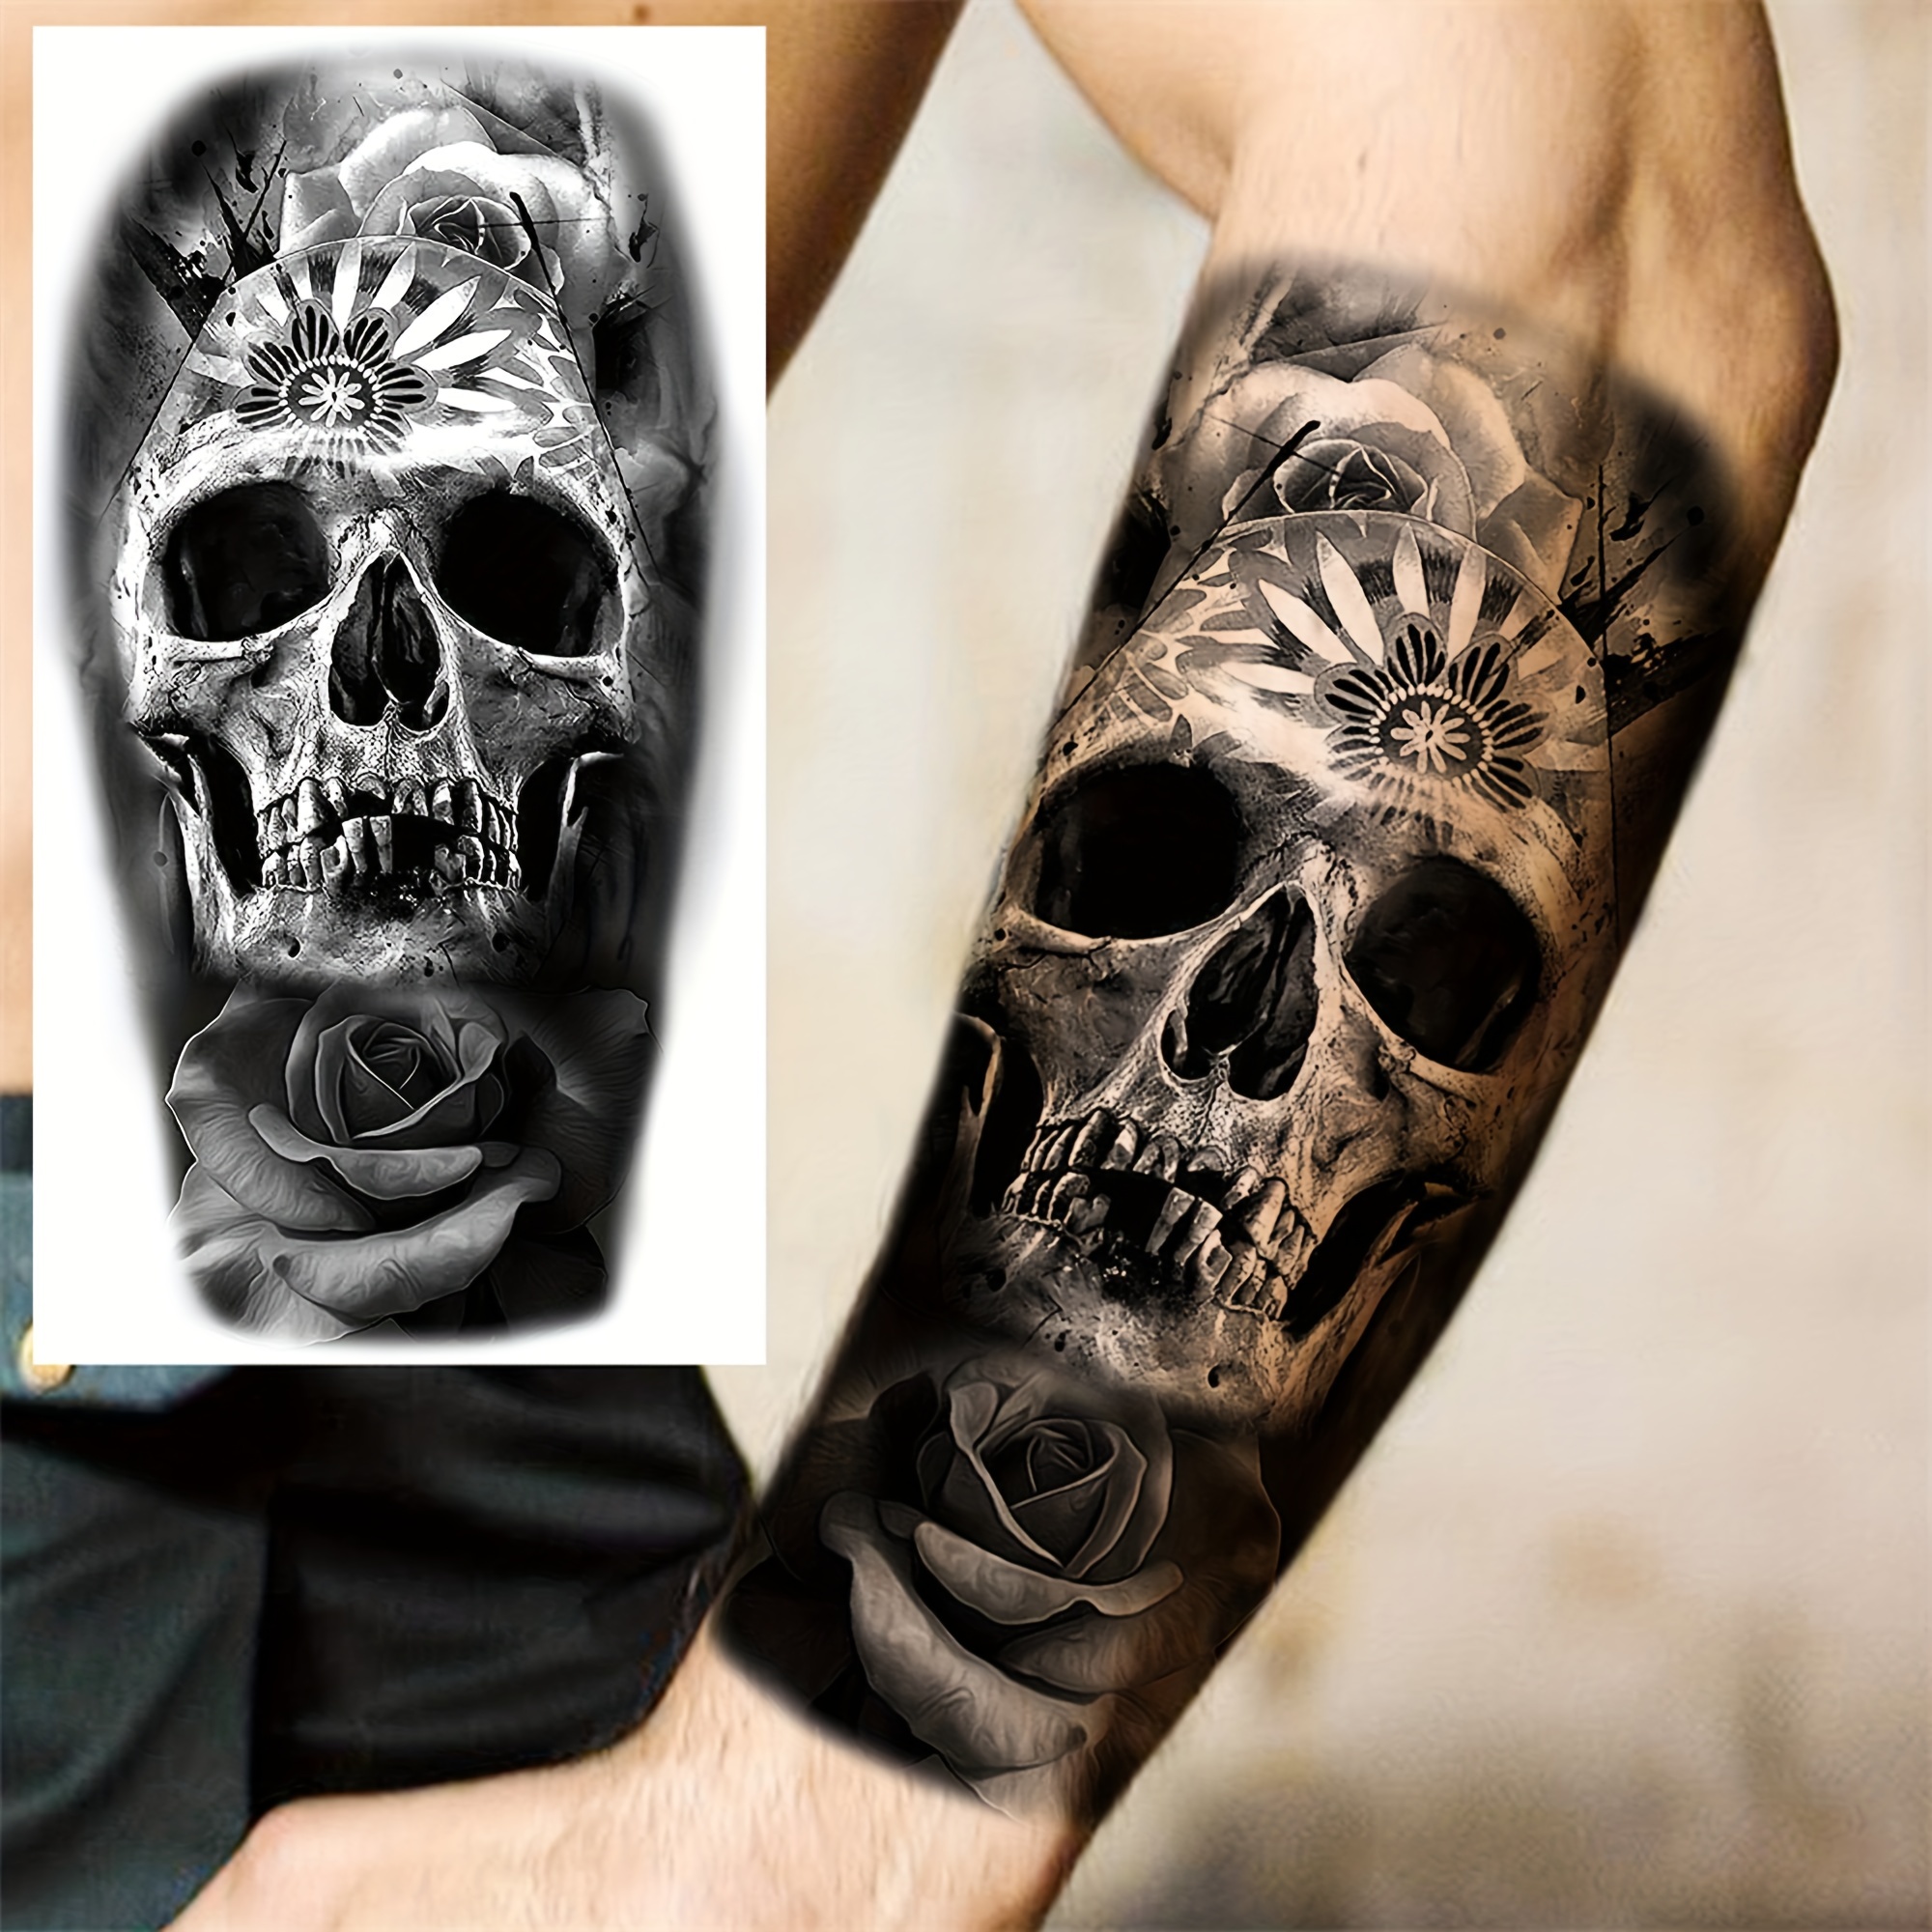 Death Skull Temporary Tattoo - Fake Wolf Tattoos Sticker Full Arm